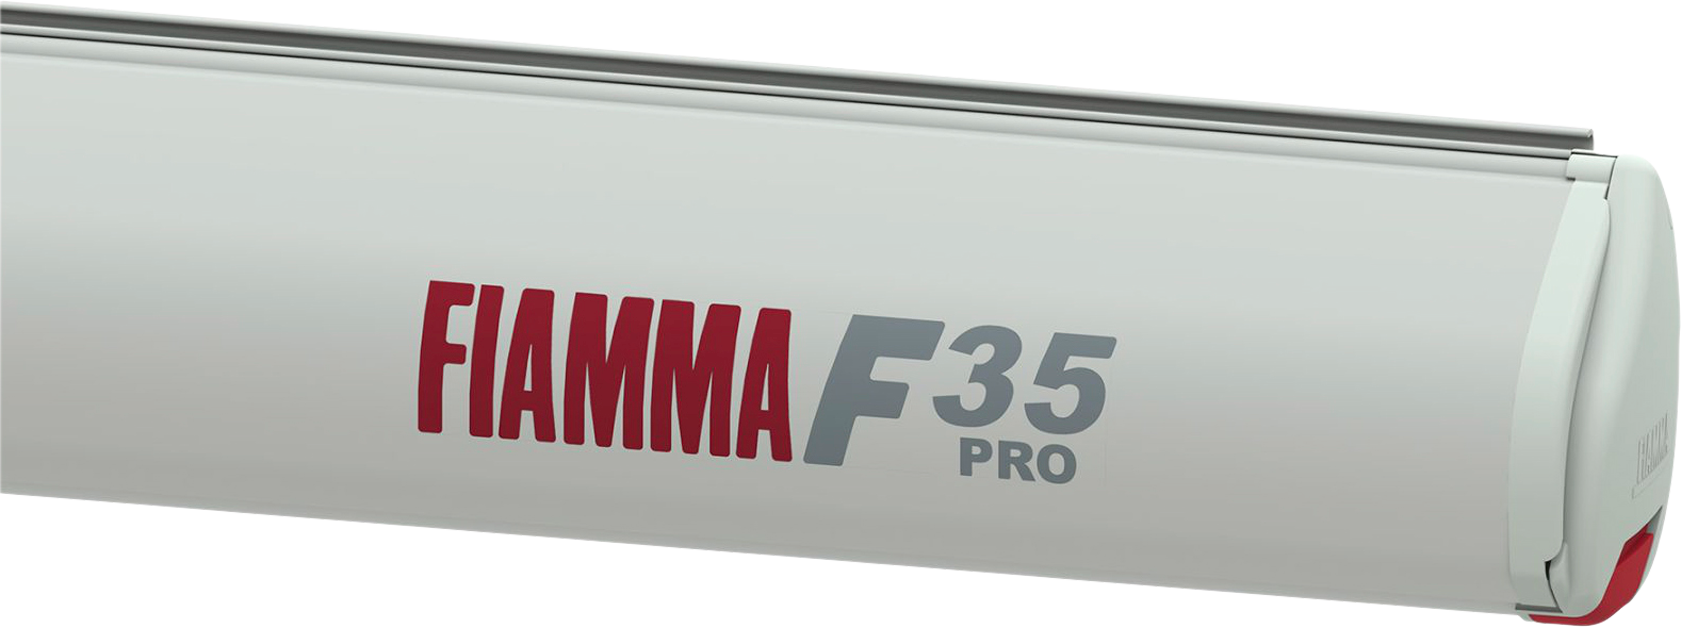 Fiamma F35 Pro 300 Markise Gehäusefarbe Titanium Tuchfarbe Royal Blue 300 cm